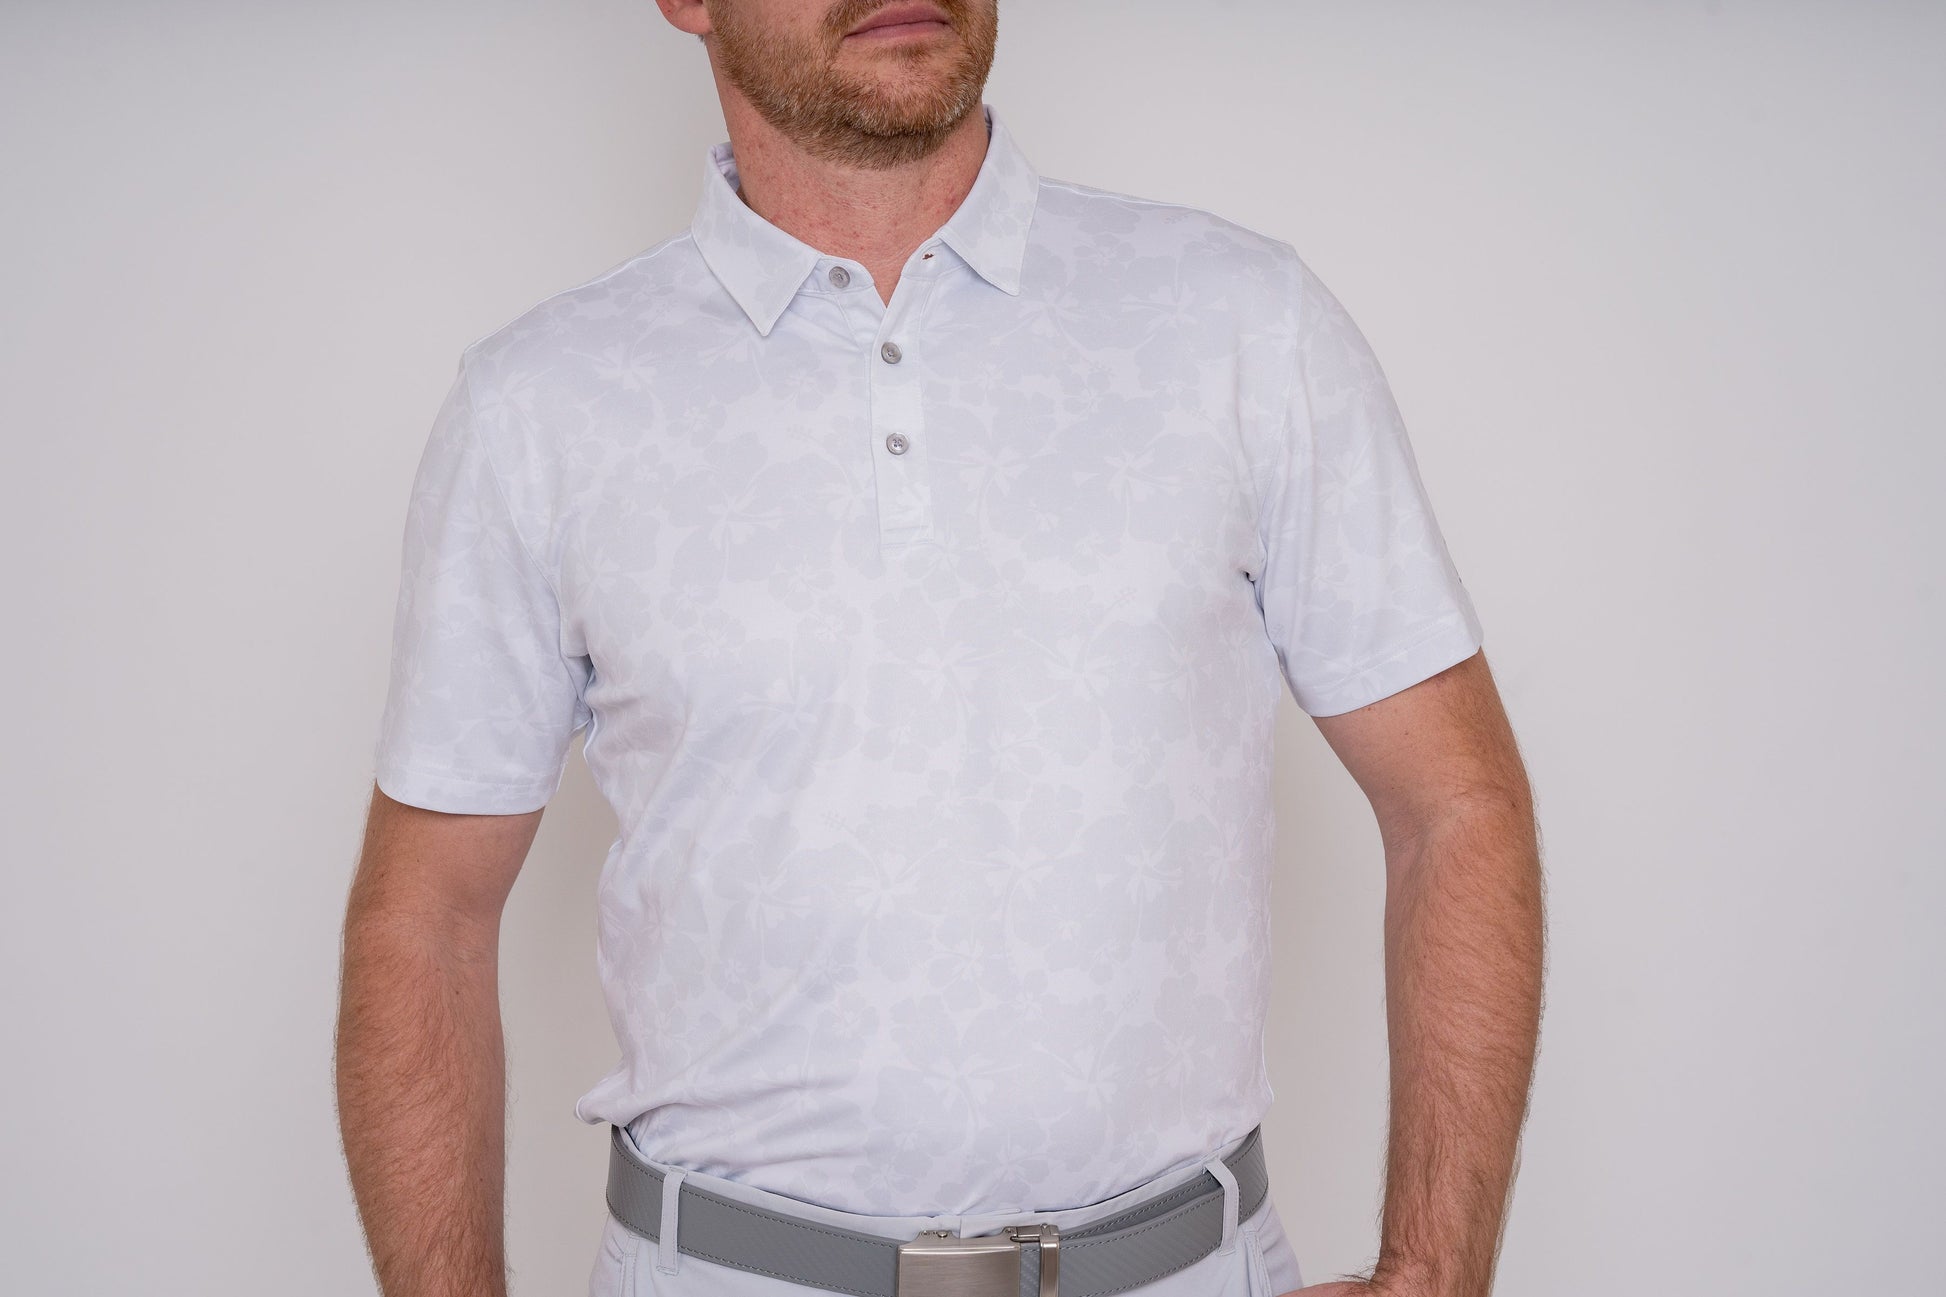 Player's Golf Shirt - White Ghost Hibiscus Men's Golf Shirt Taylor Jordan Apparel White Small 